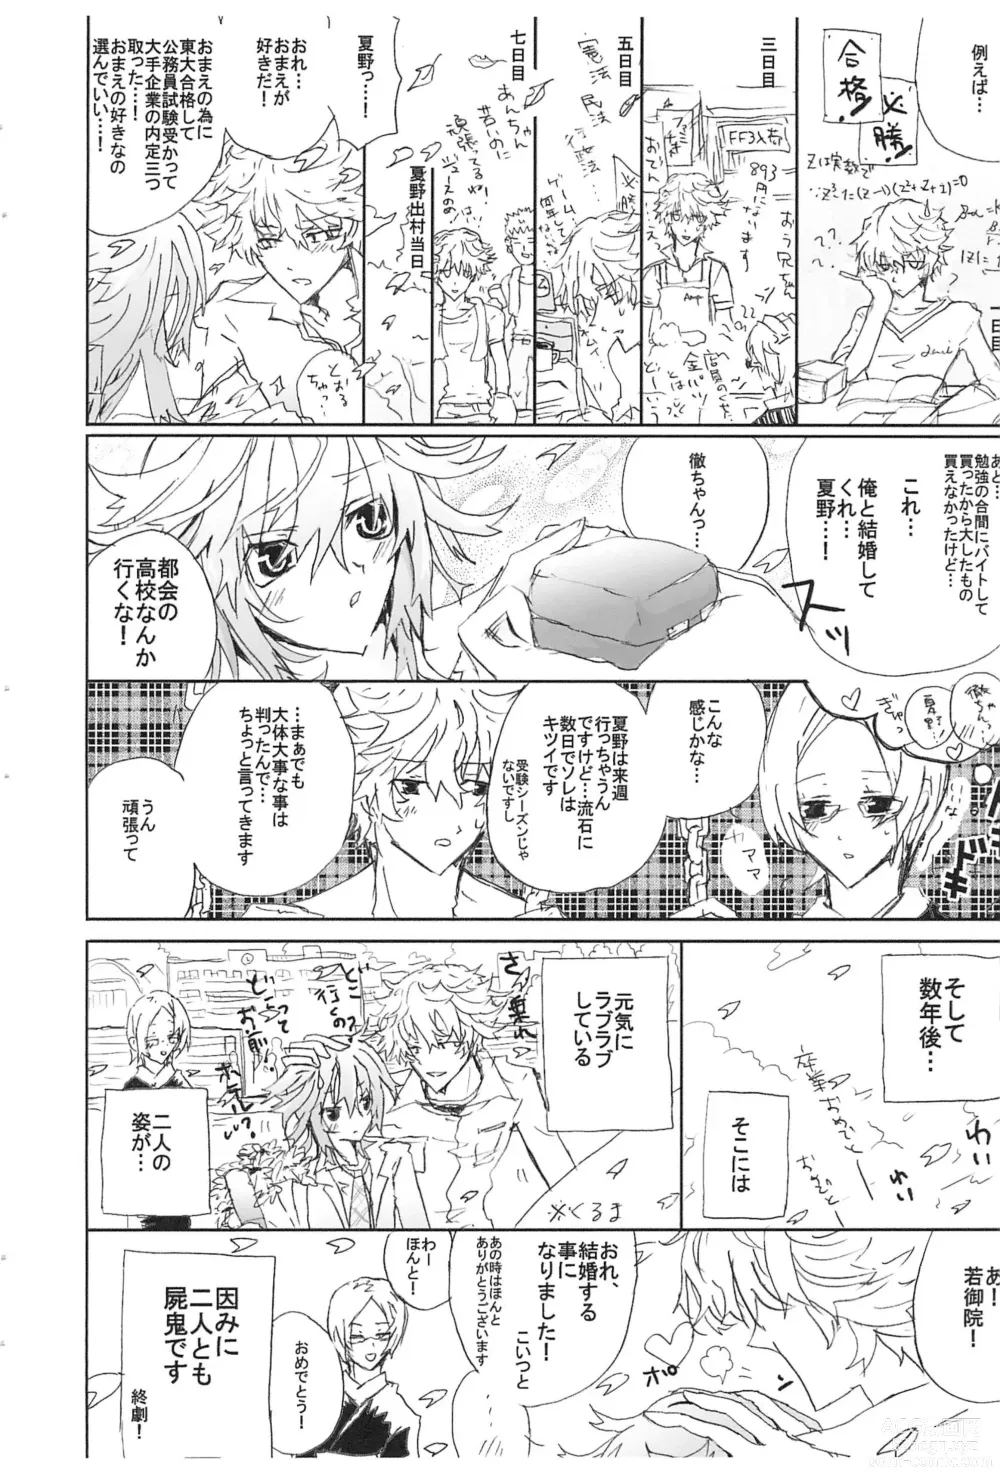 Page 18 of doujinshi Shiki-hon 6